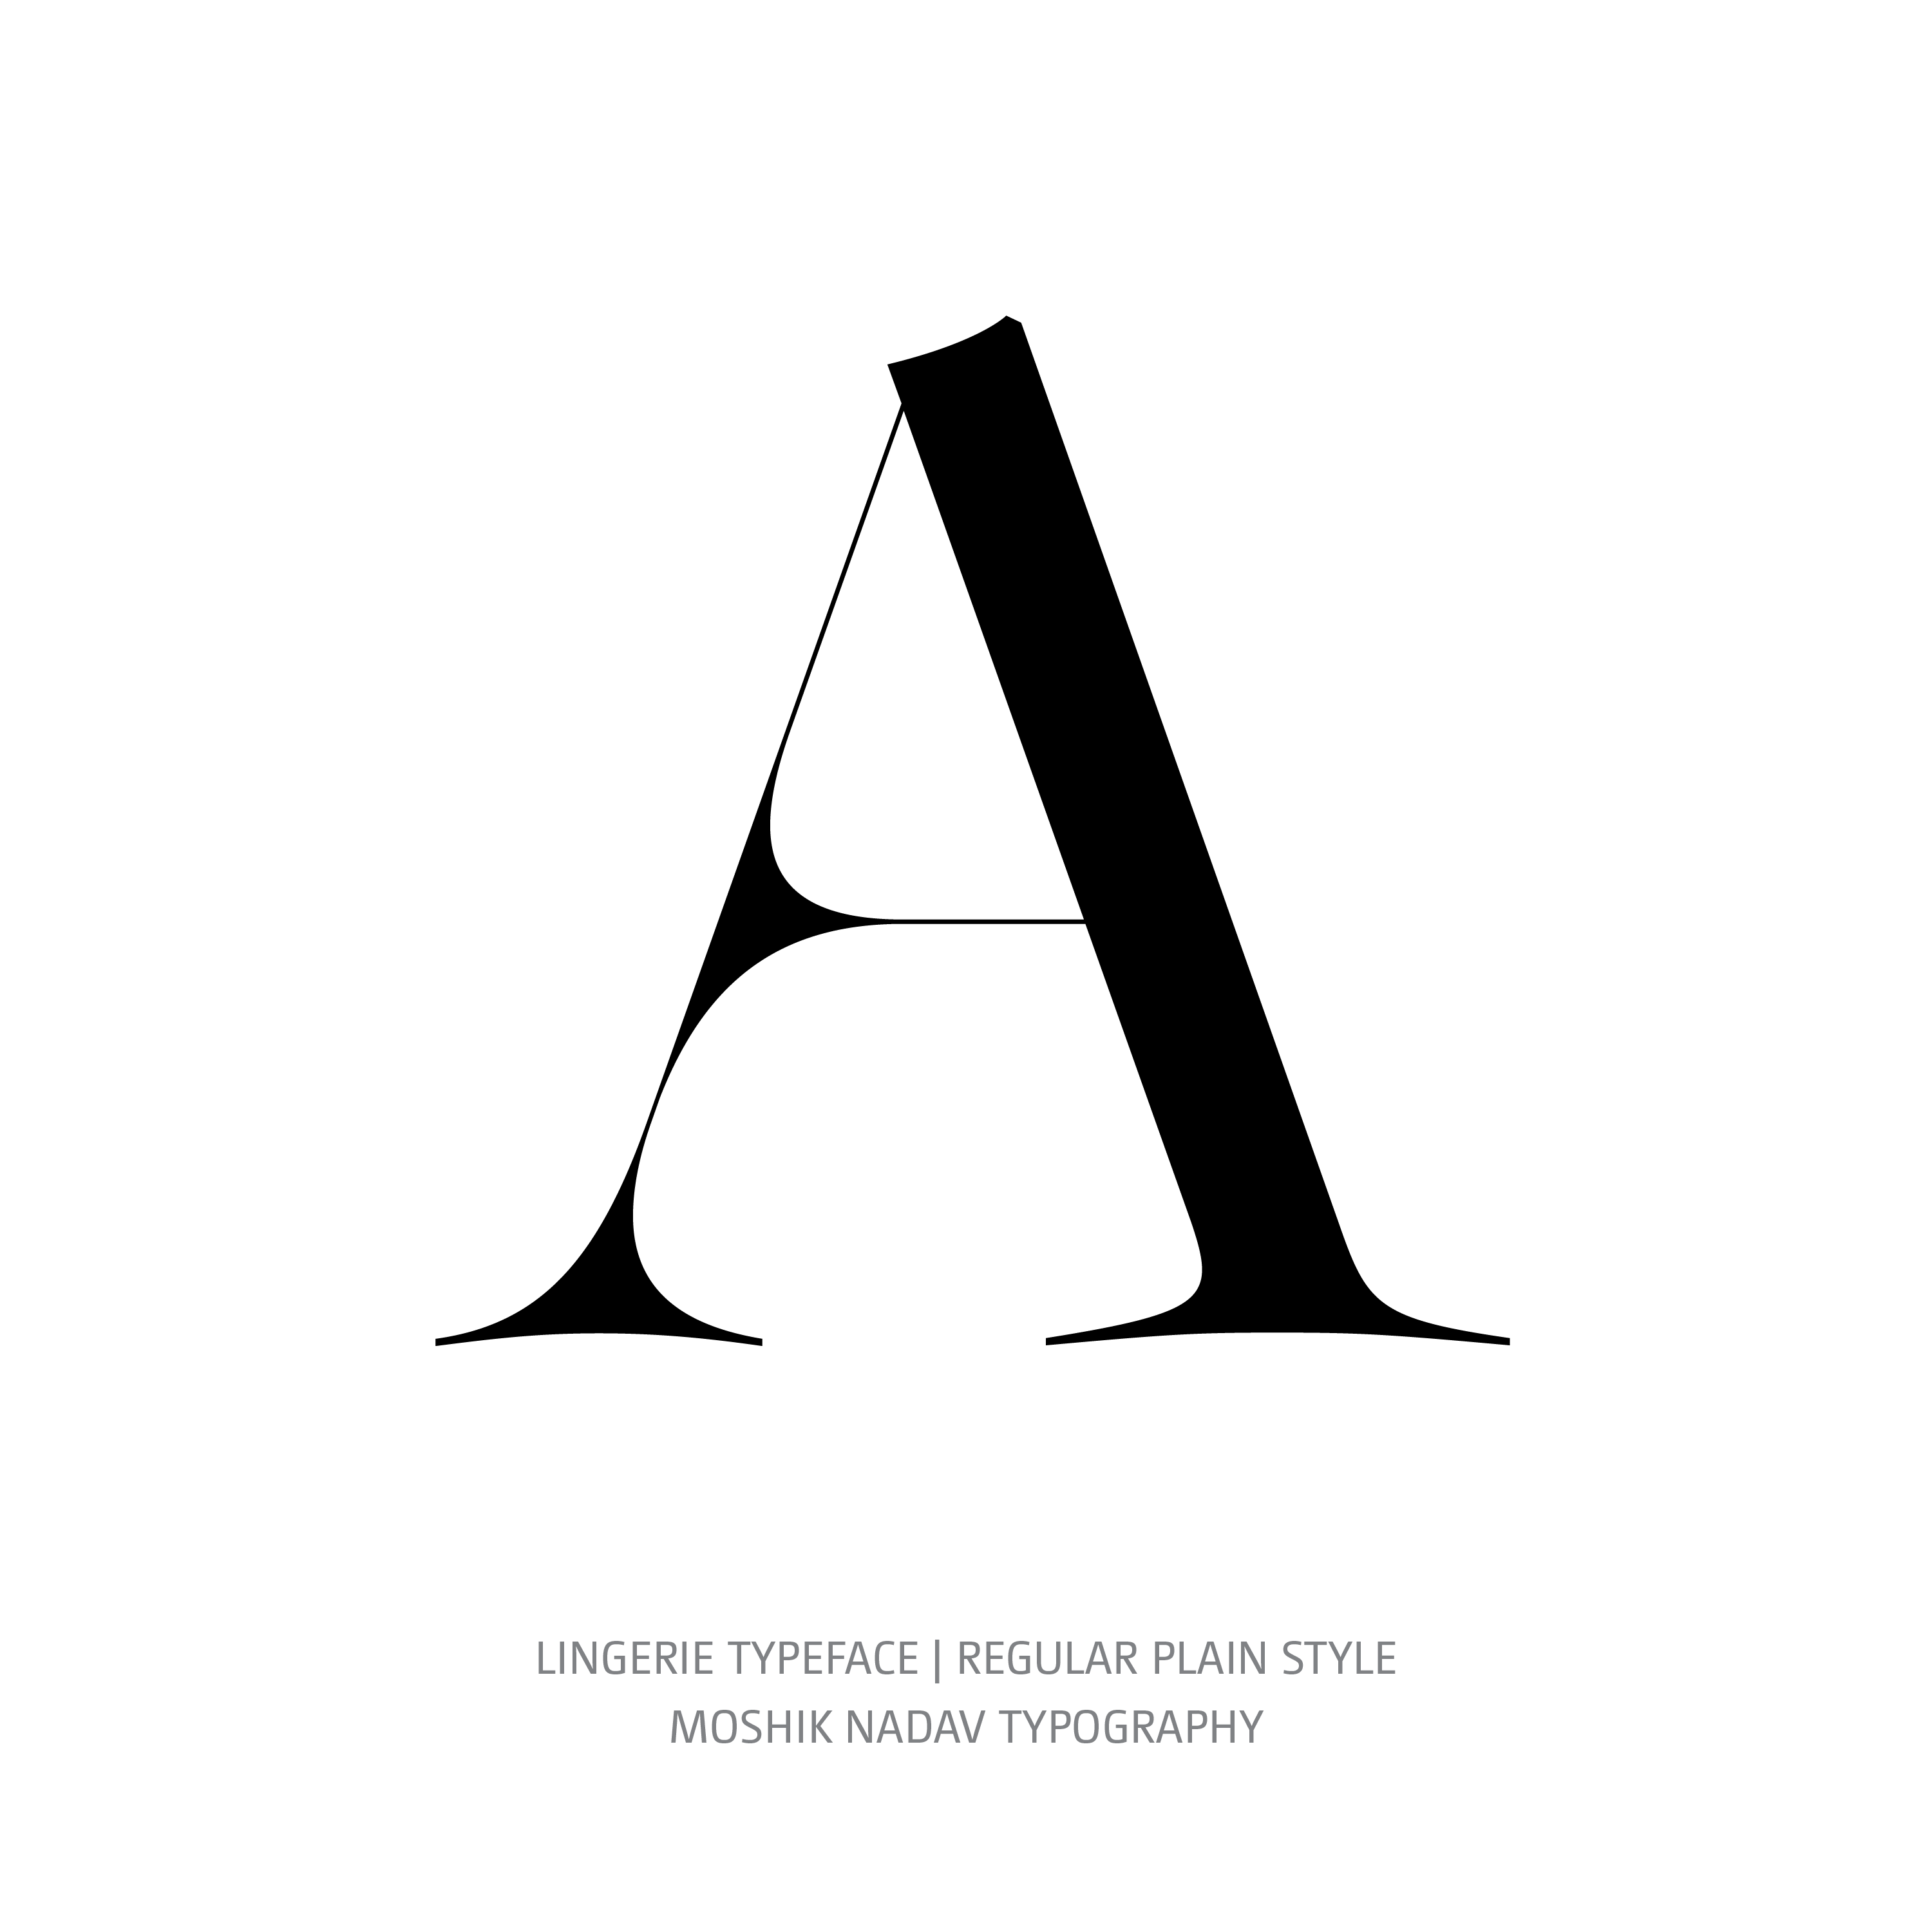 Lingerie Typeface Regular Plain A